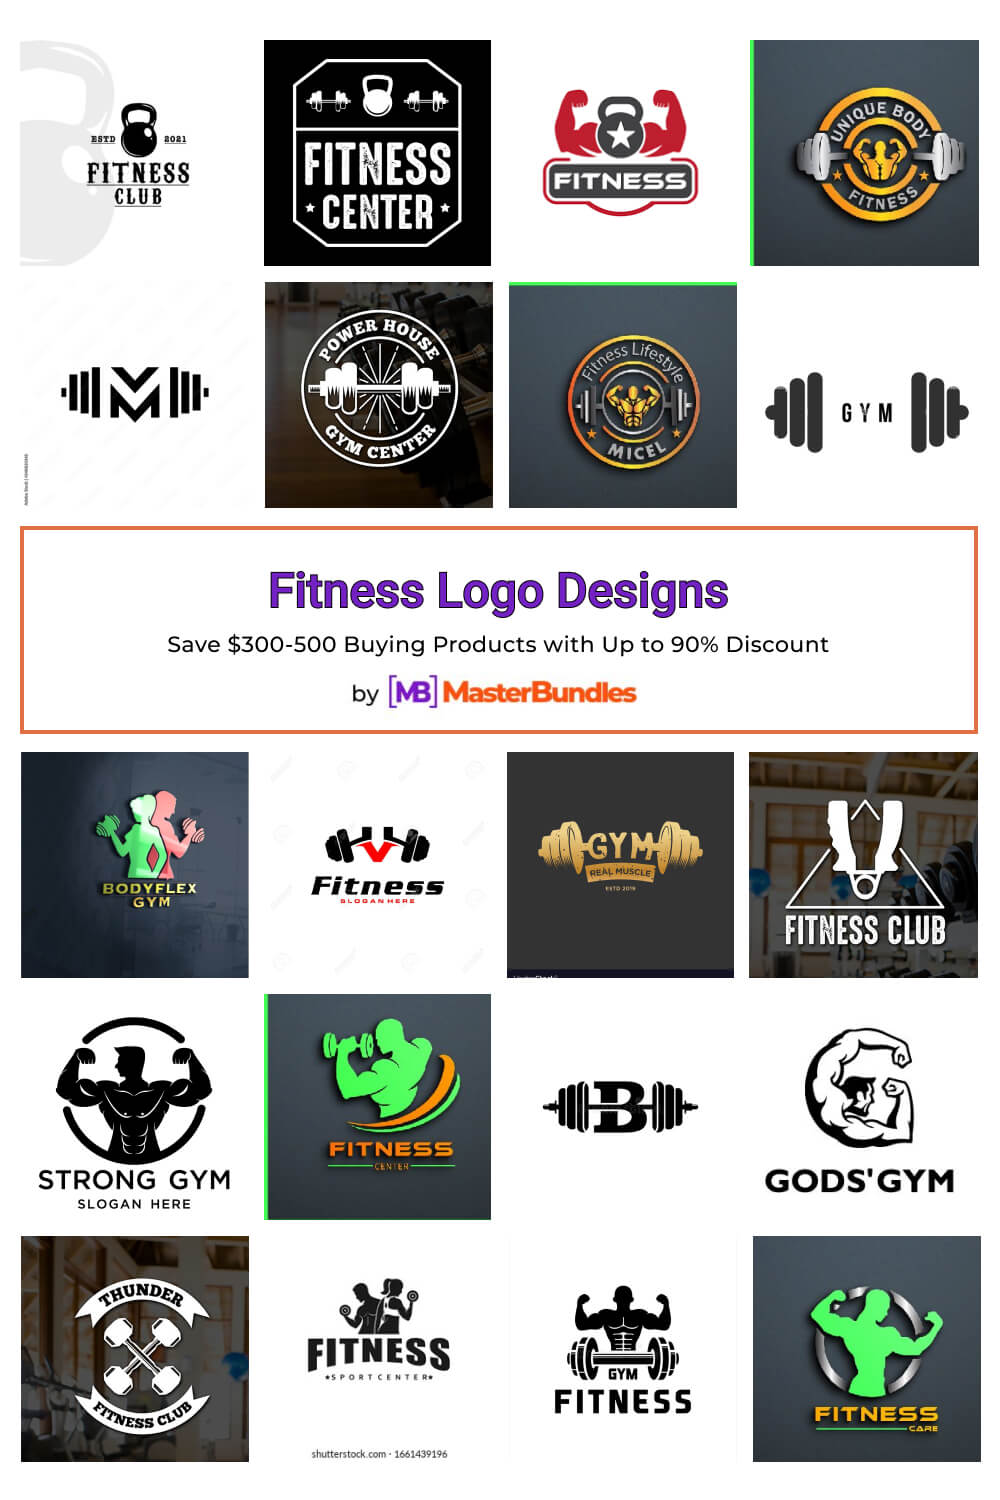 fitness logo designs pinterest image.